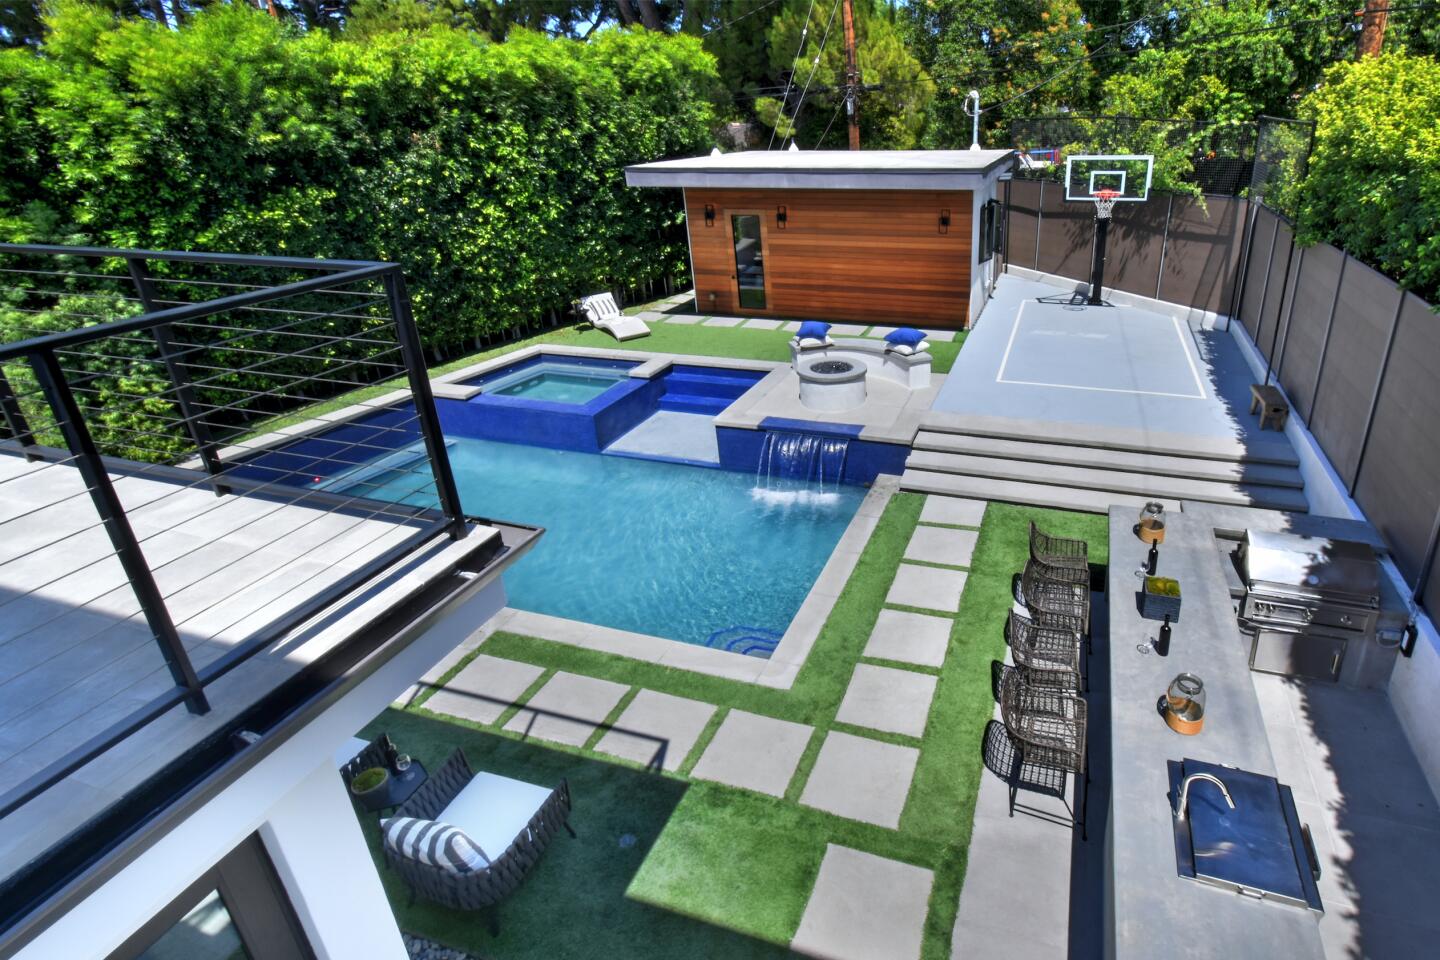 Wiz Khalifa wants $4.5 million for modern Encino home - Los Angeles Times